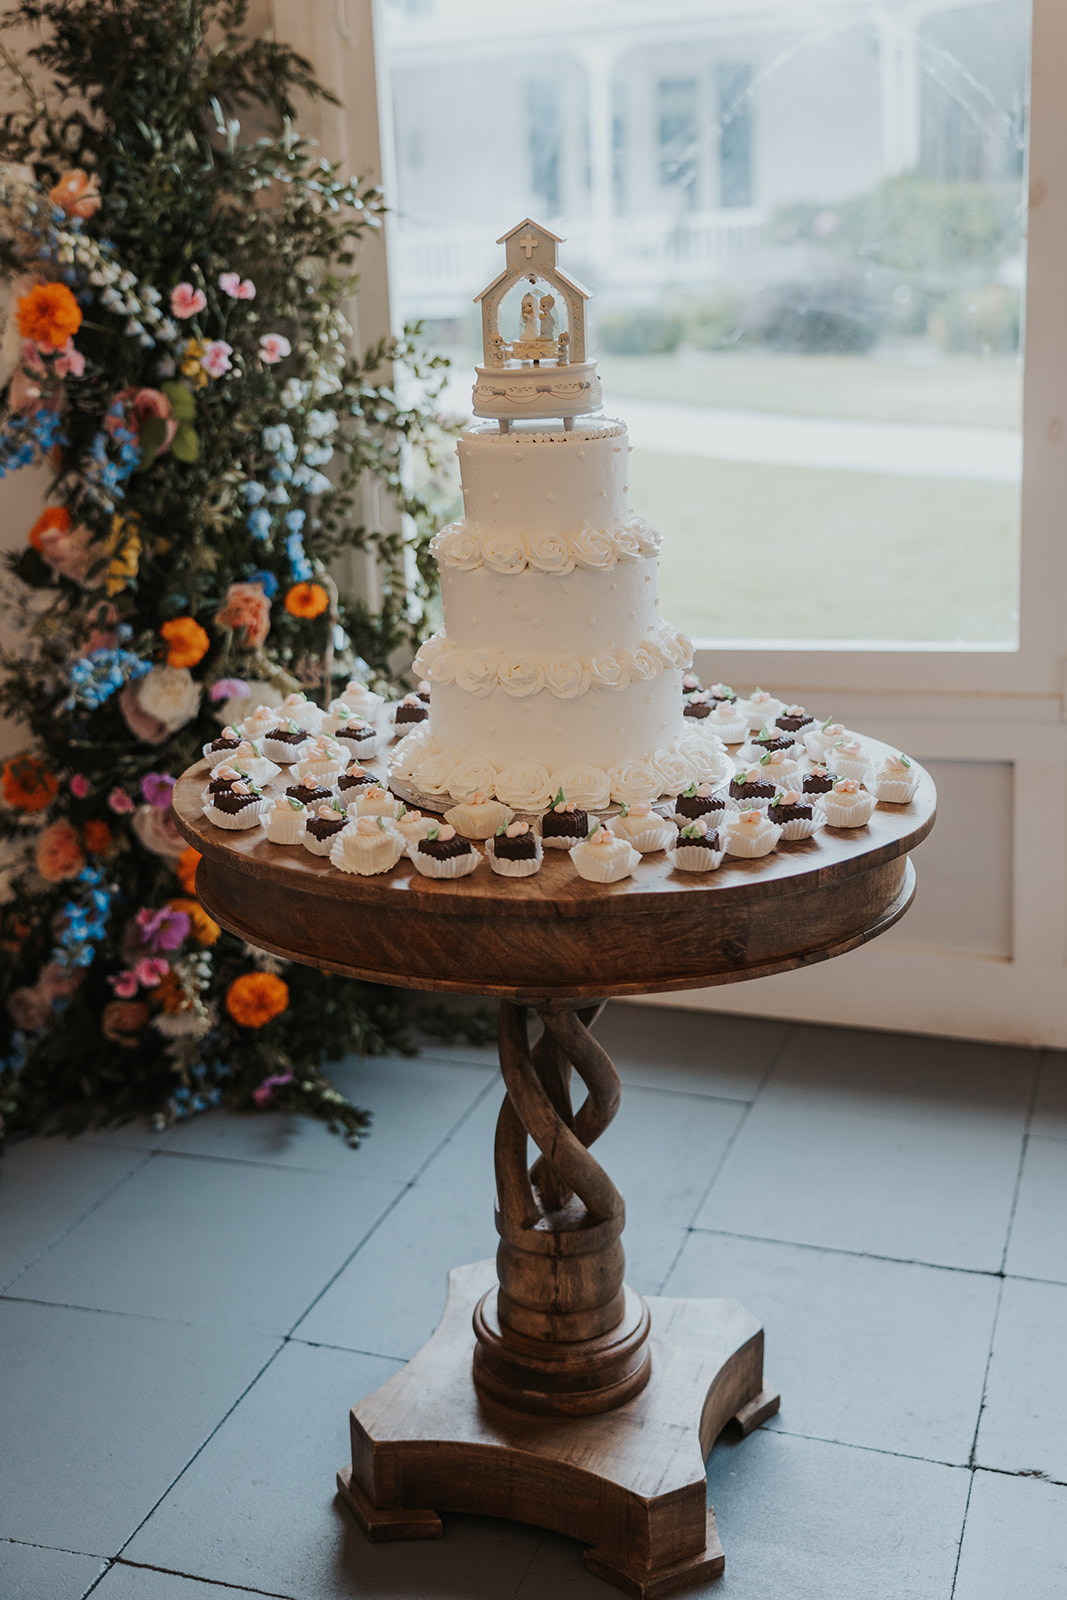 Stunning wedding cake at sentimental Georgia wedding